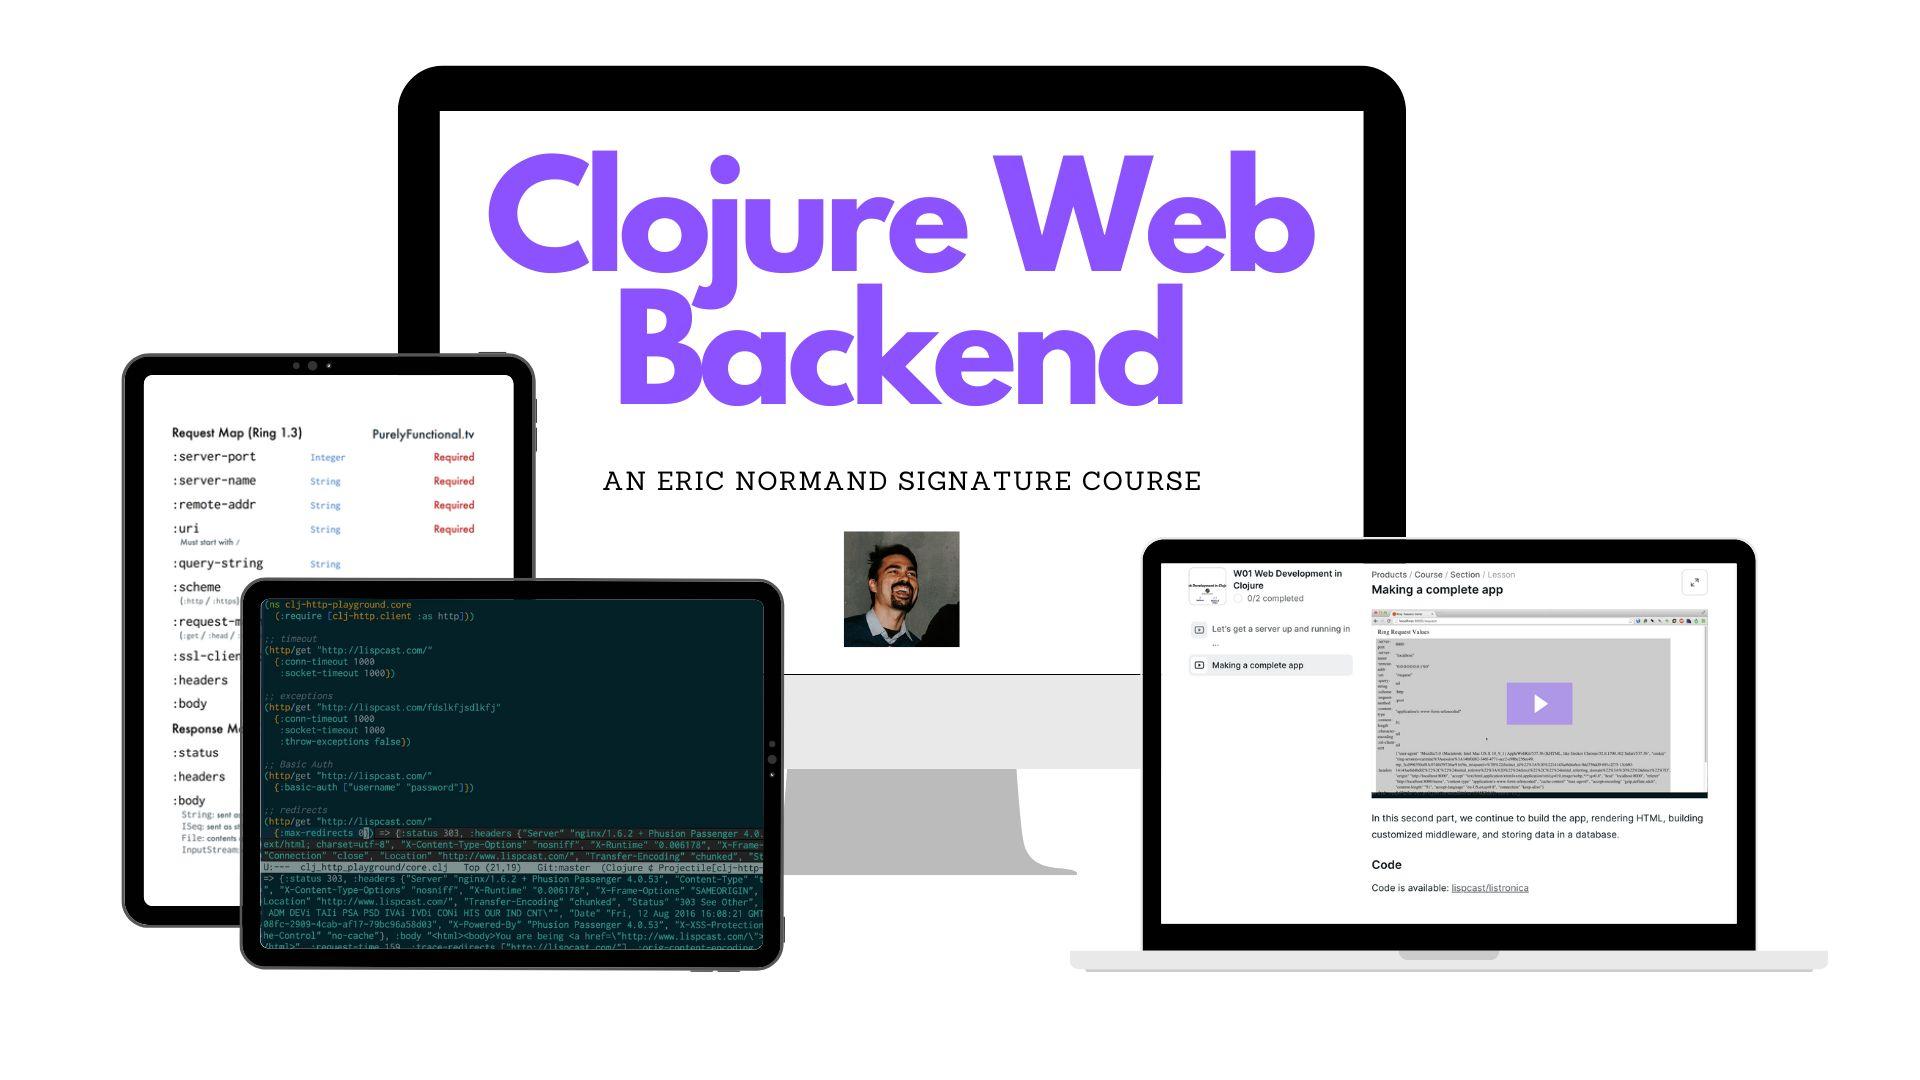 Clojure Web Backend: An Eric Normand Signature Course